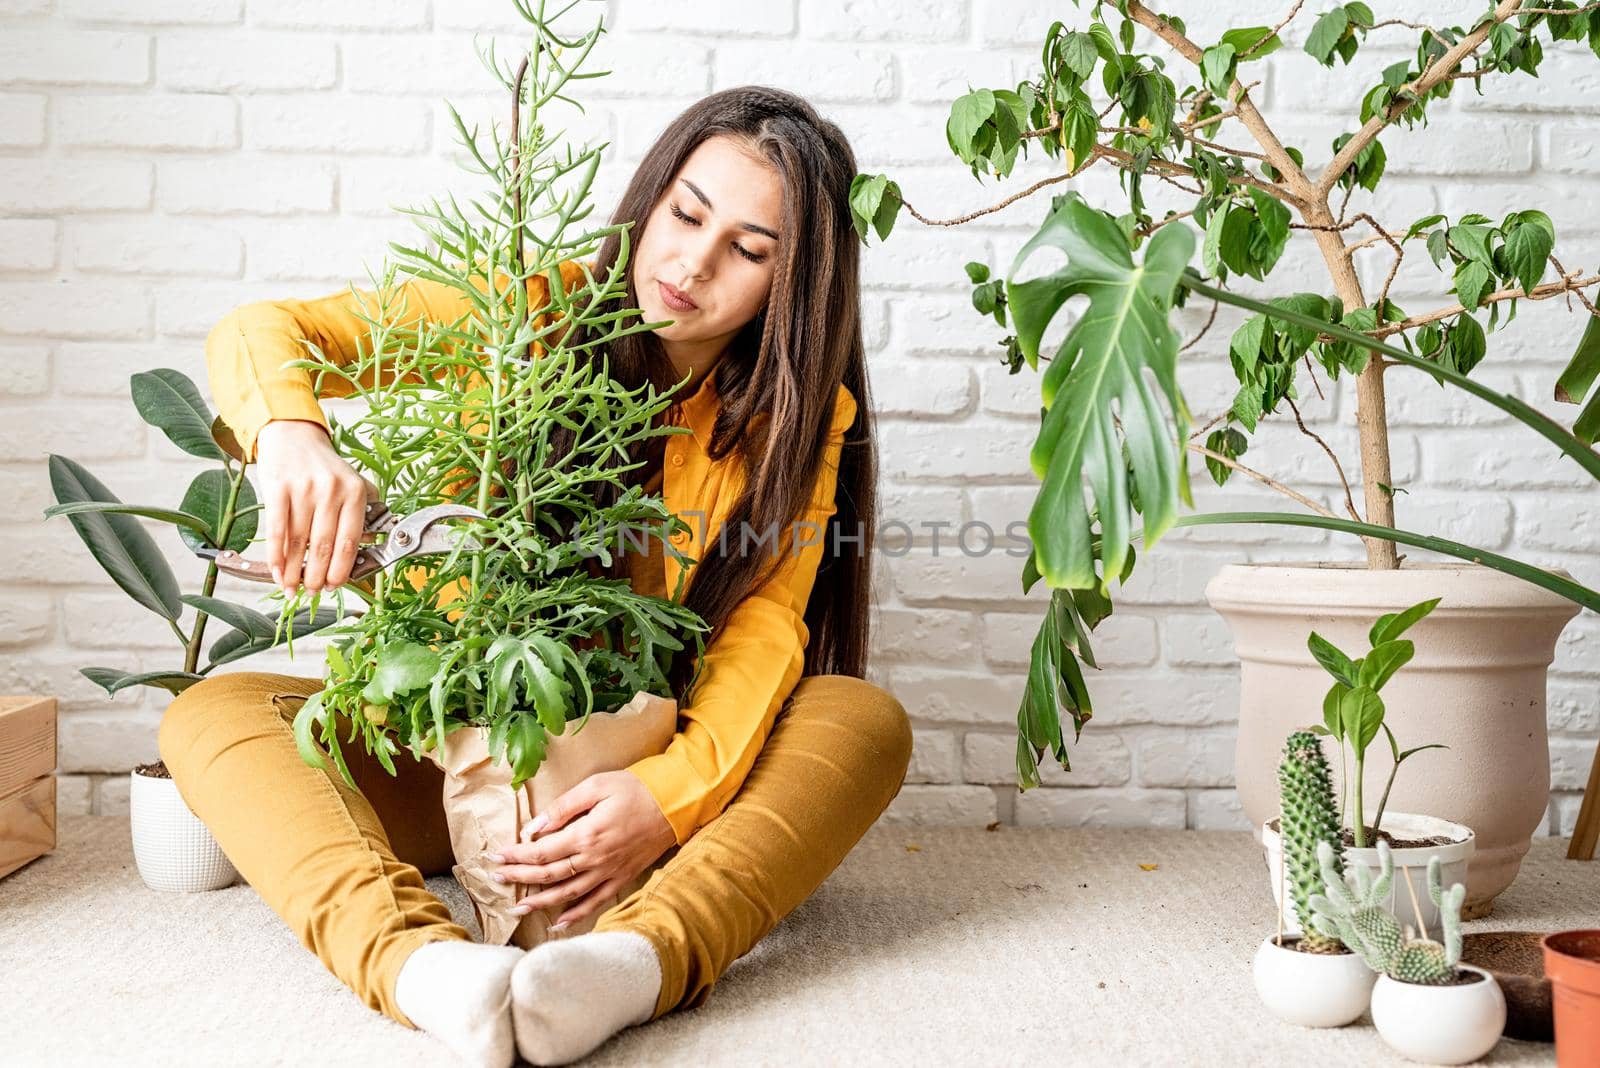 Home gardening. Woman gardener taking care of her home garden kalanchoe plant